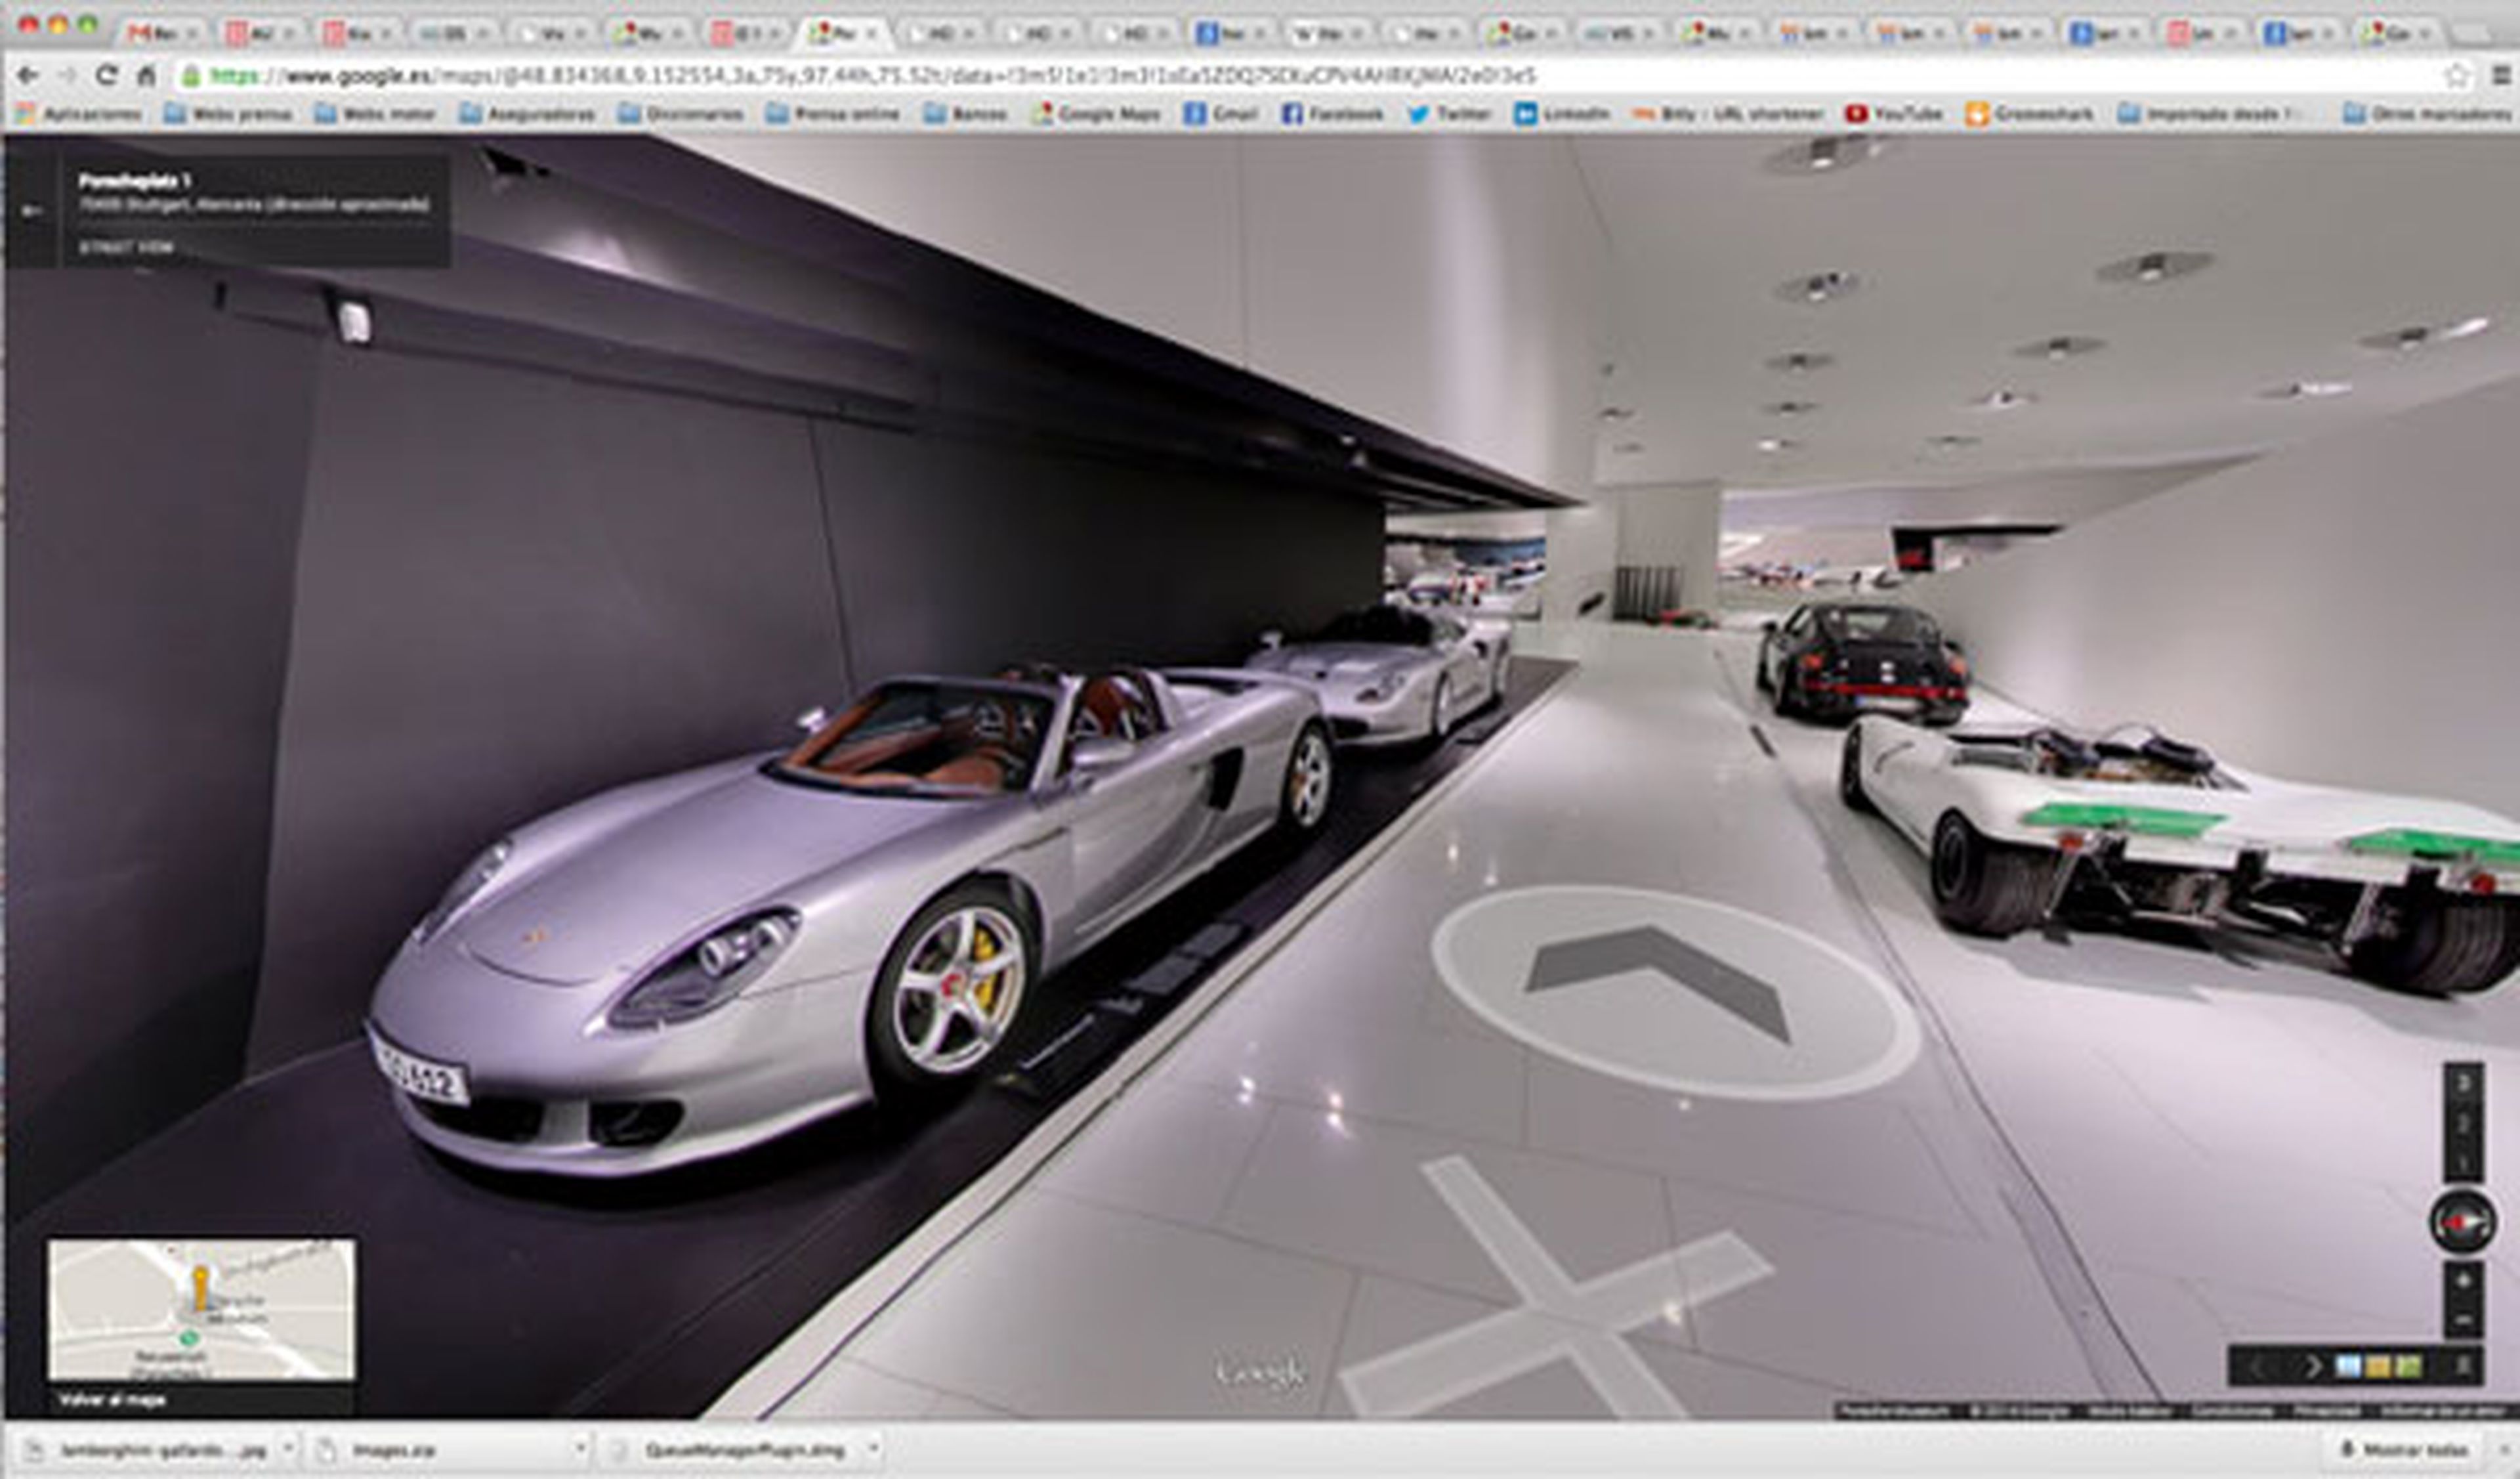 Visita museos de coches con Street View de Google Maps